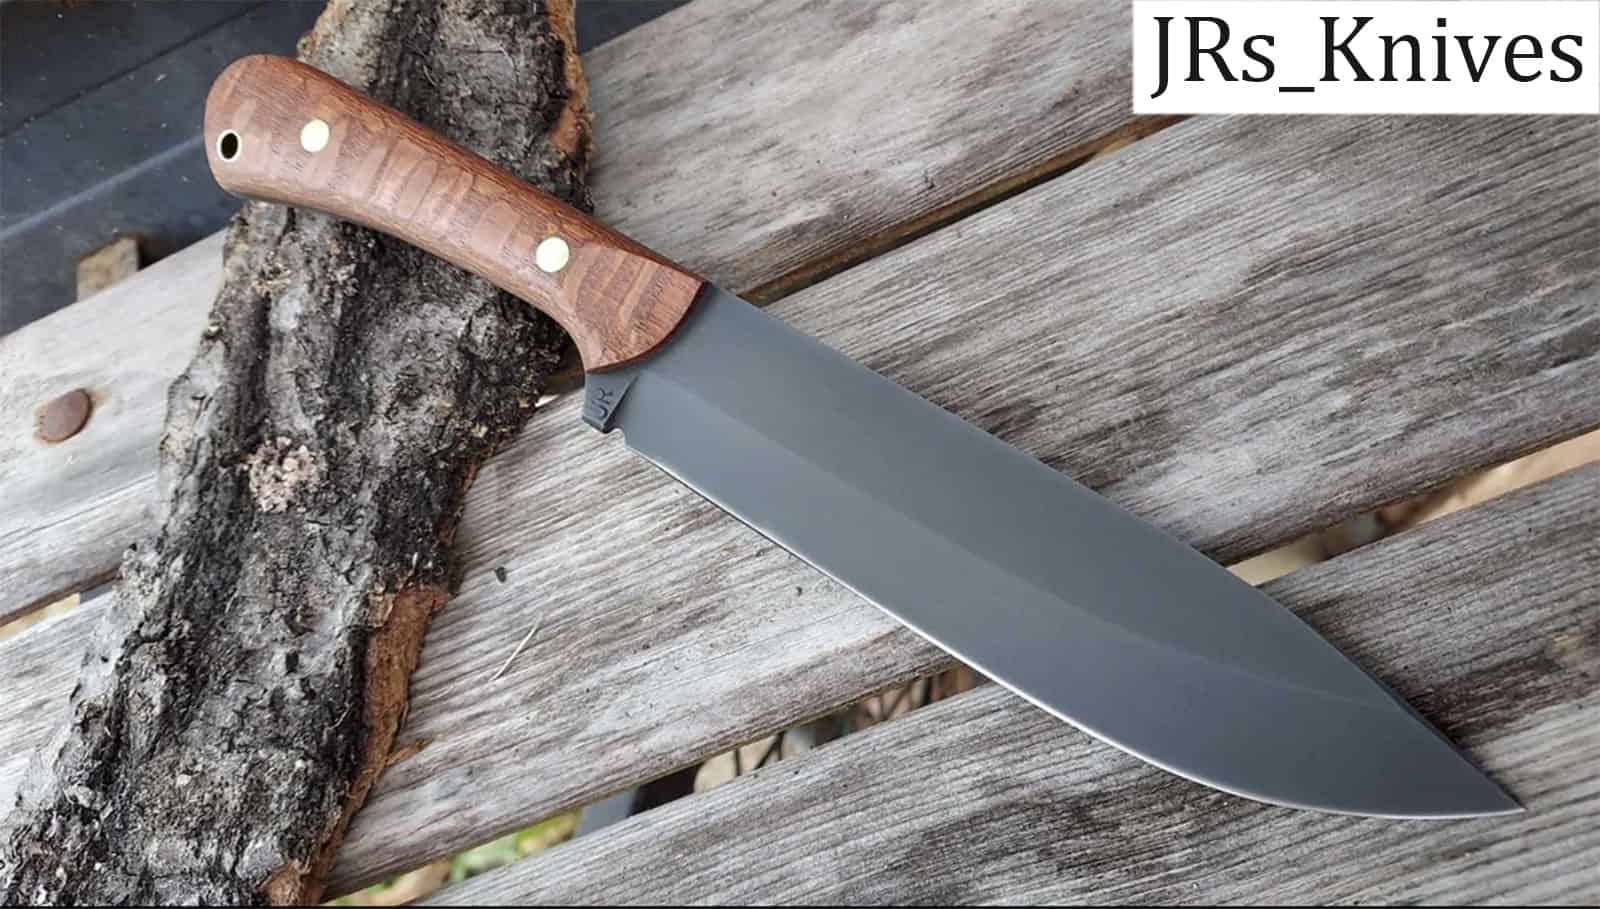 https://www.nothingbutknives.com/wp-content/uploads/2018/10/JRs-Knives-Fixed-Blade.jpg